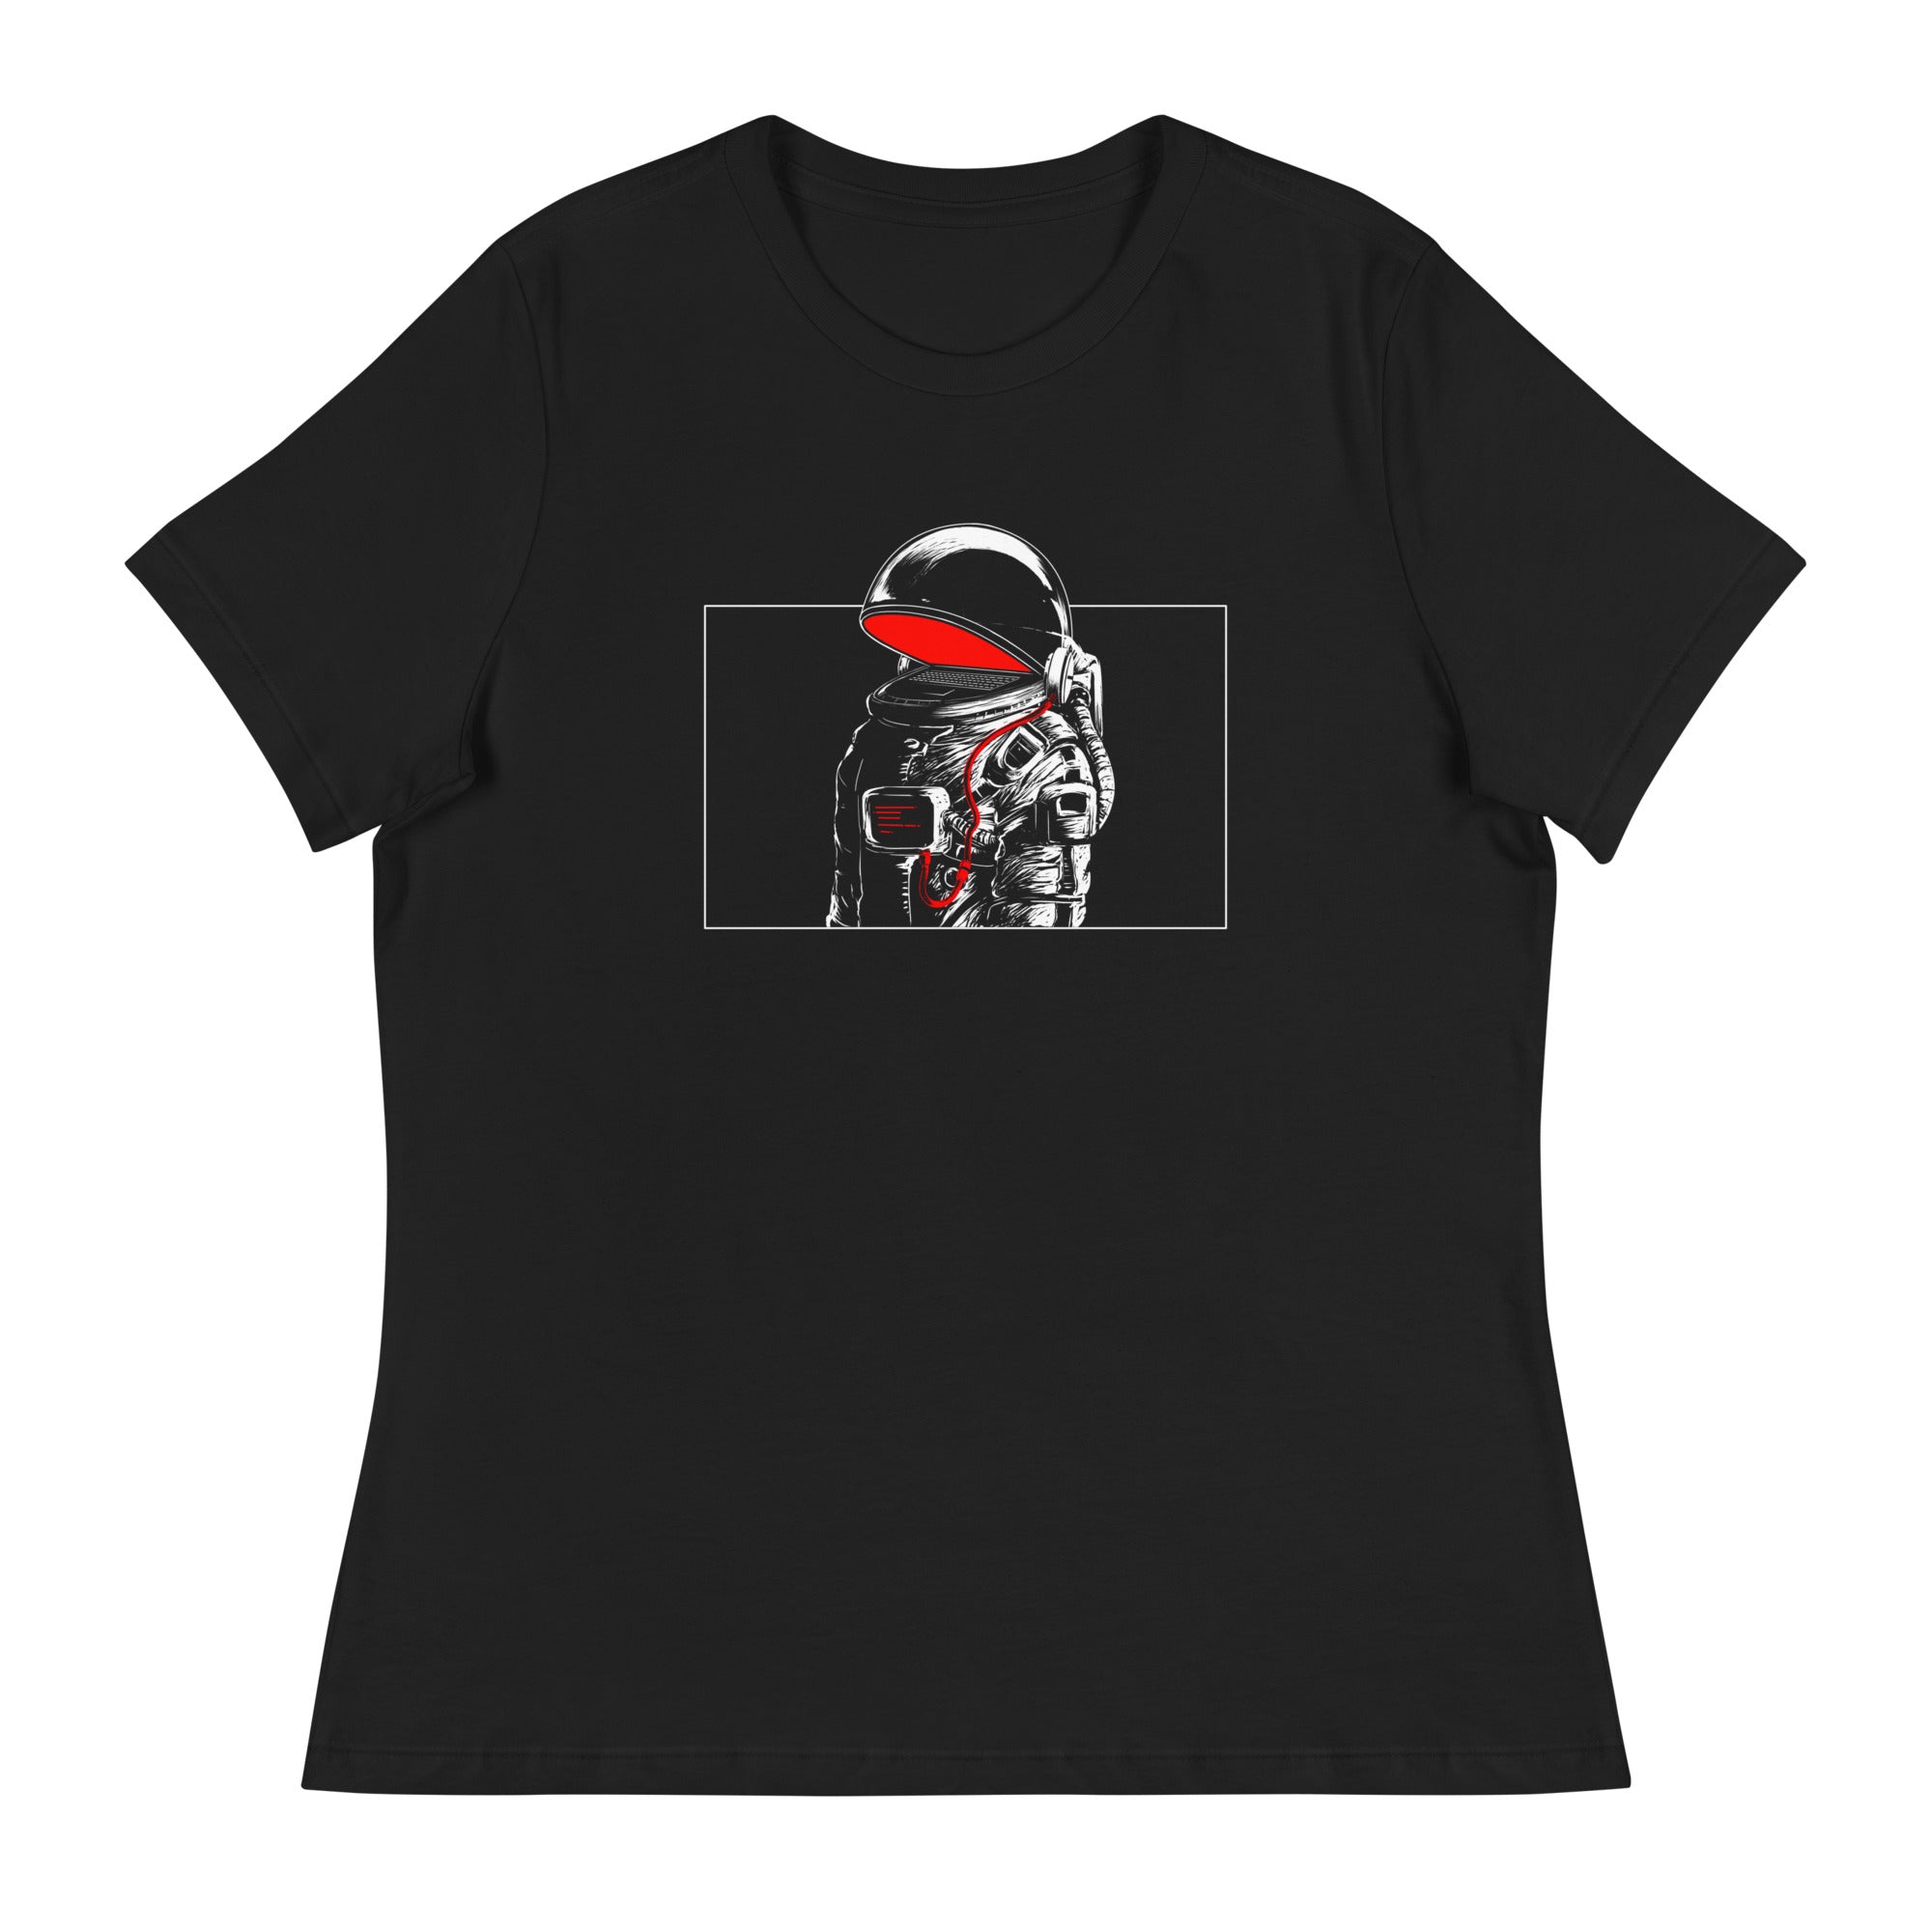 Cyber Space Suit - Women's T-Shirt